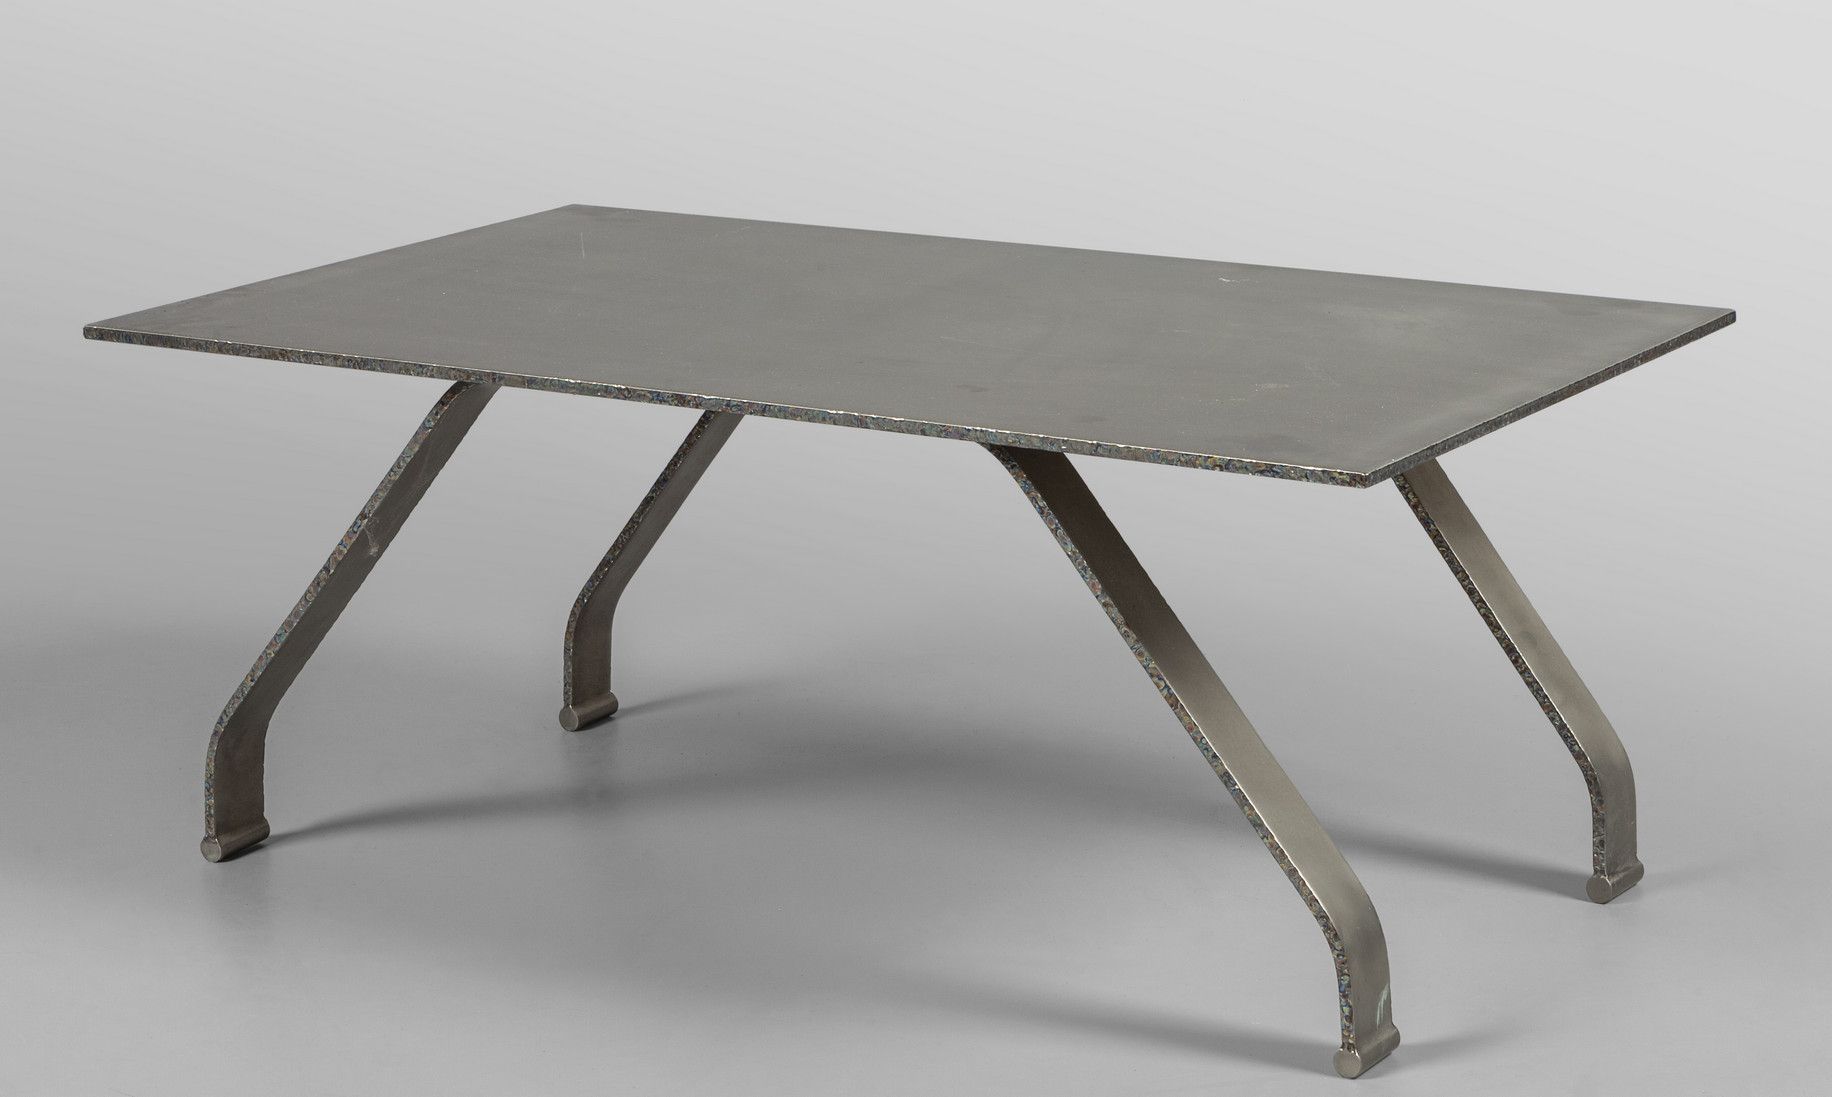 Tavolino da divano in titanio 钛合金咖啡桌
cm. 100x57 h. 40, Kg.34 approx.